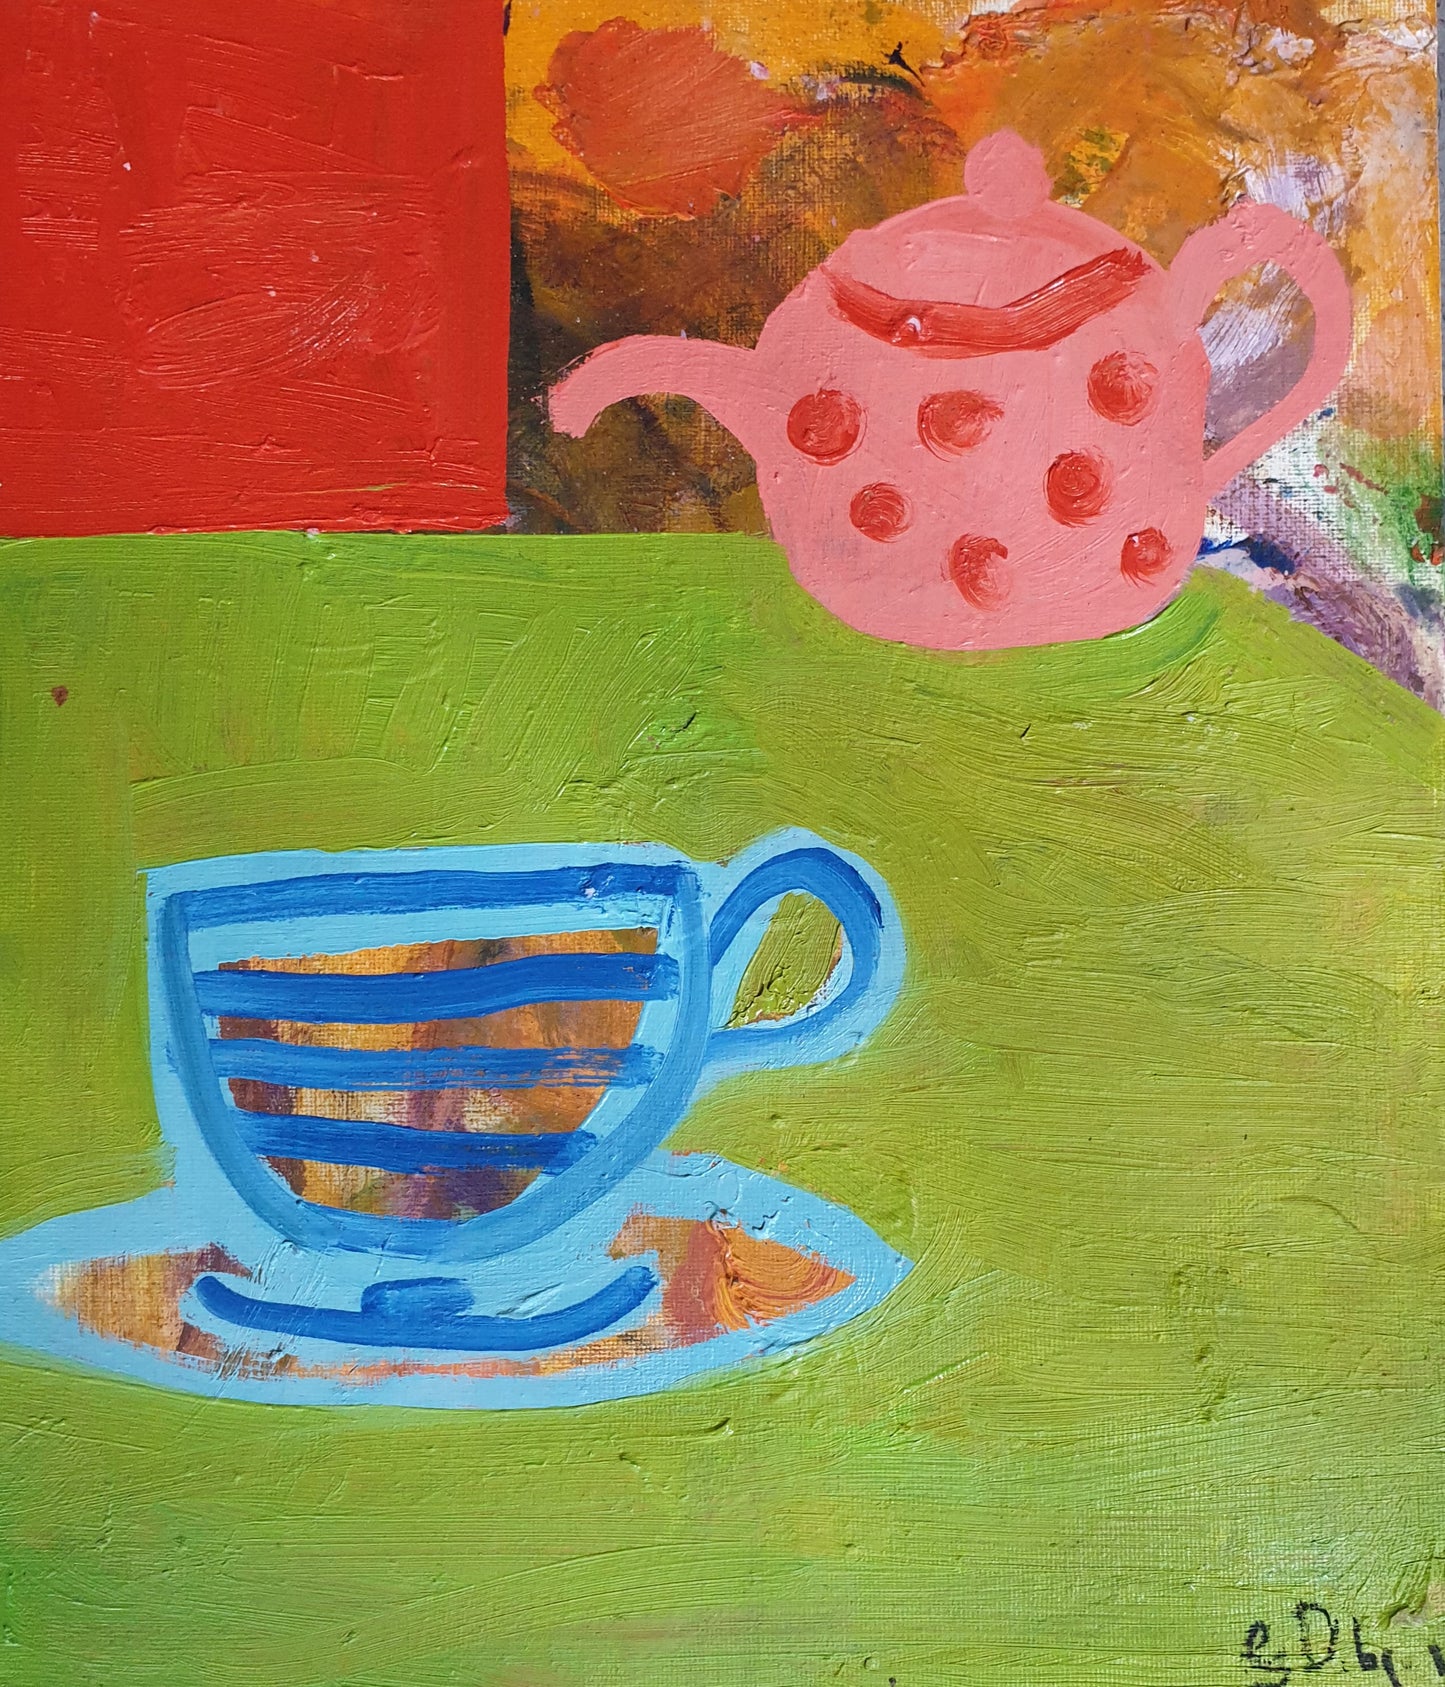 Pink teapot, blue cup